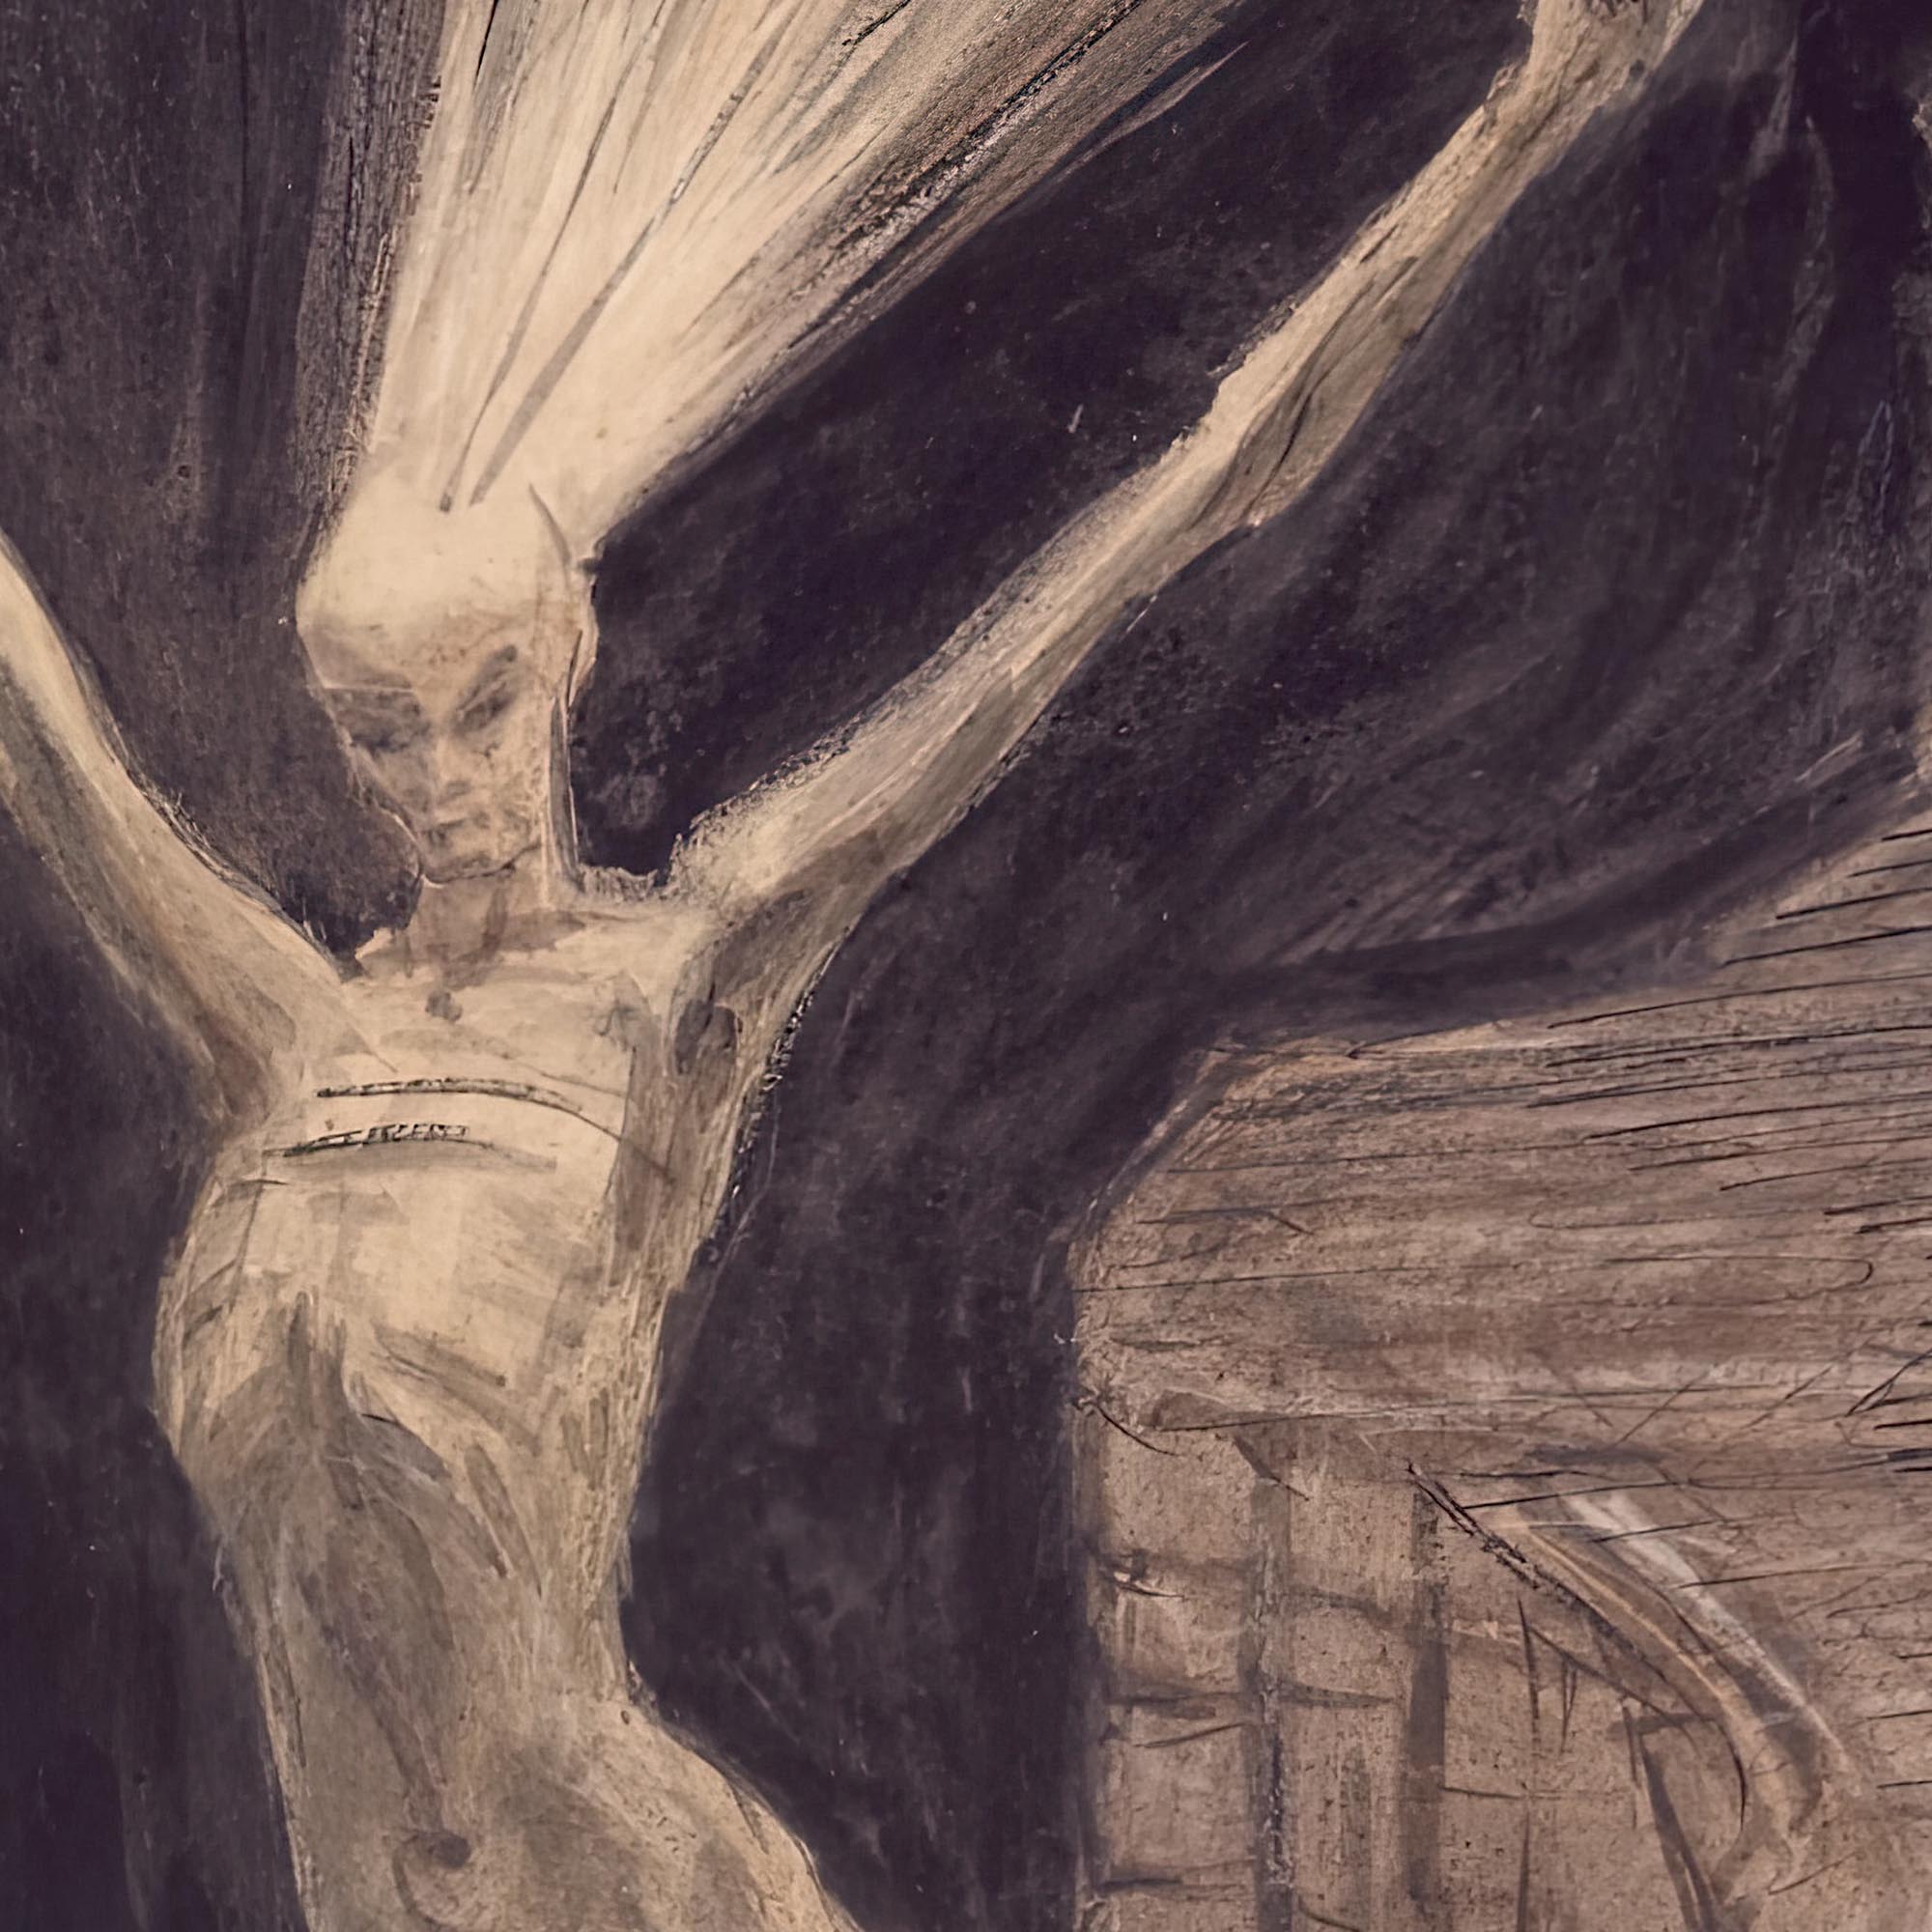 Framed Print Alfred Kubin: God of Light | Antique Symbolist Surrealist | Gothic Home Decor | Dark Fantasy Occult Mystic Pagan Magick Framed Art Print